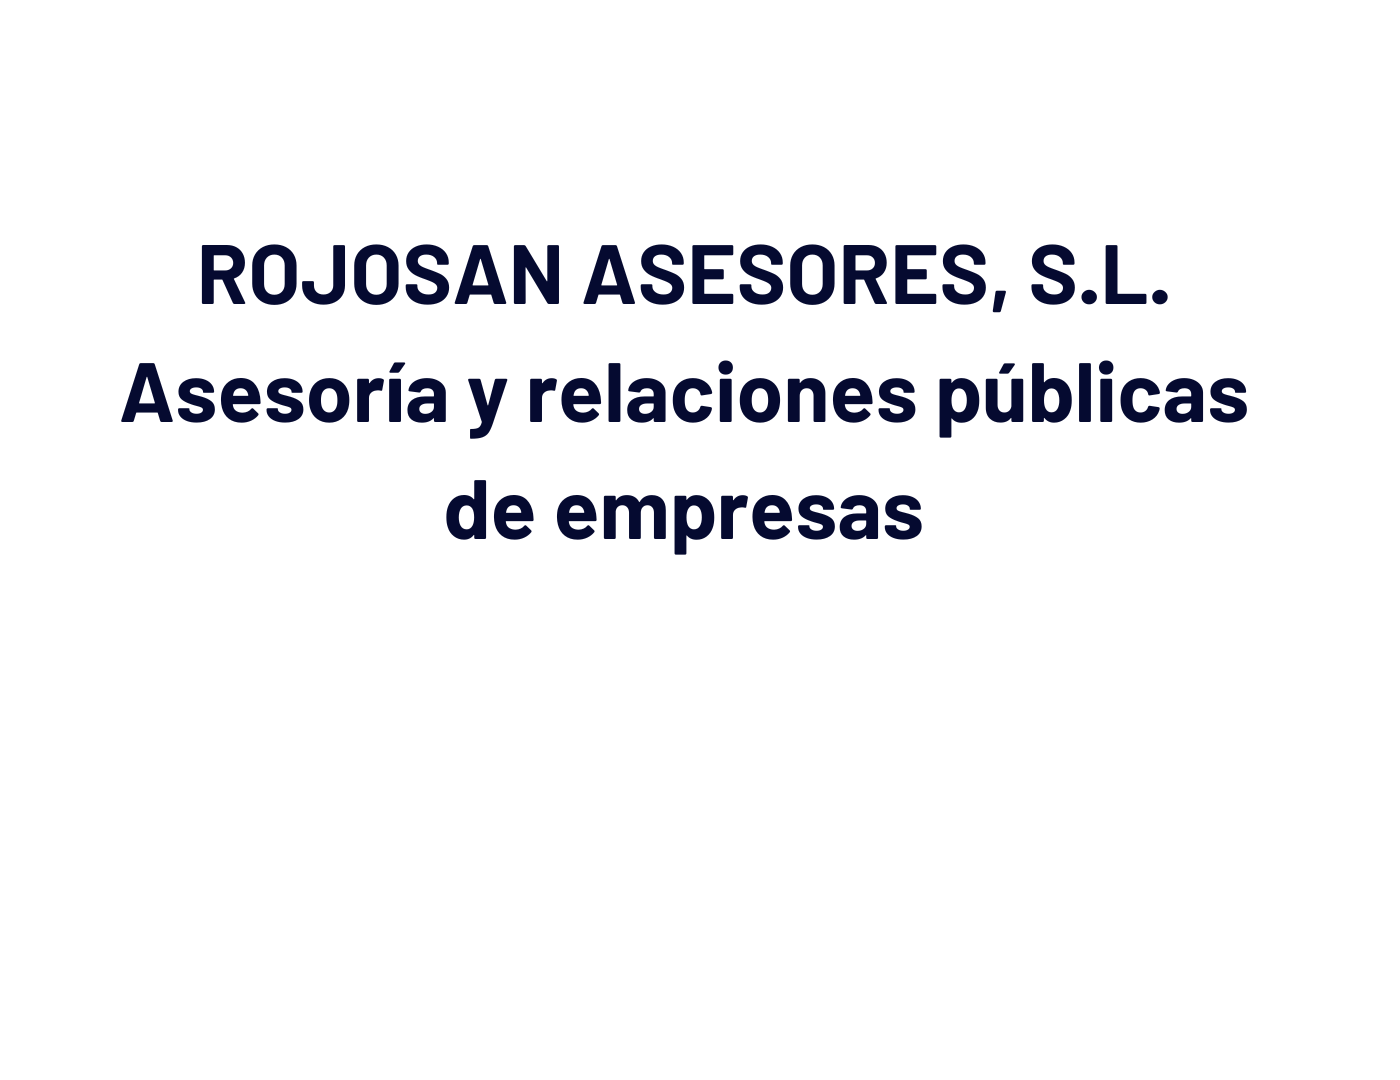 ROJOSAN ASESORES, S.L.